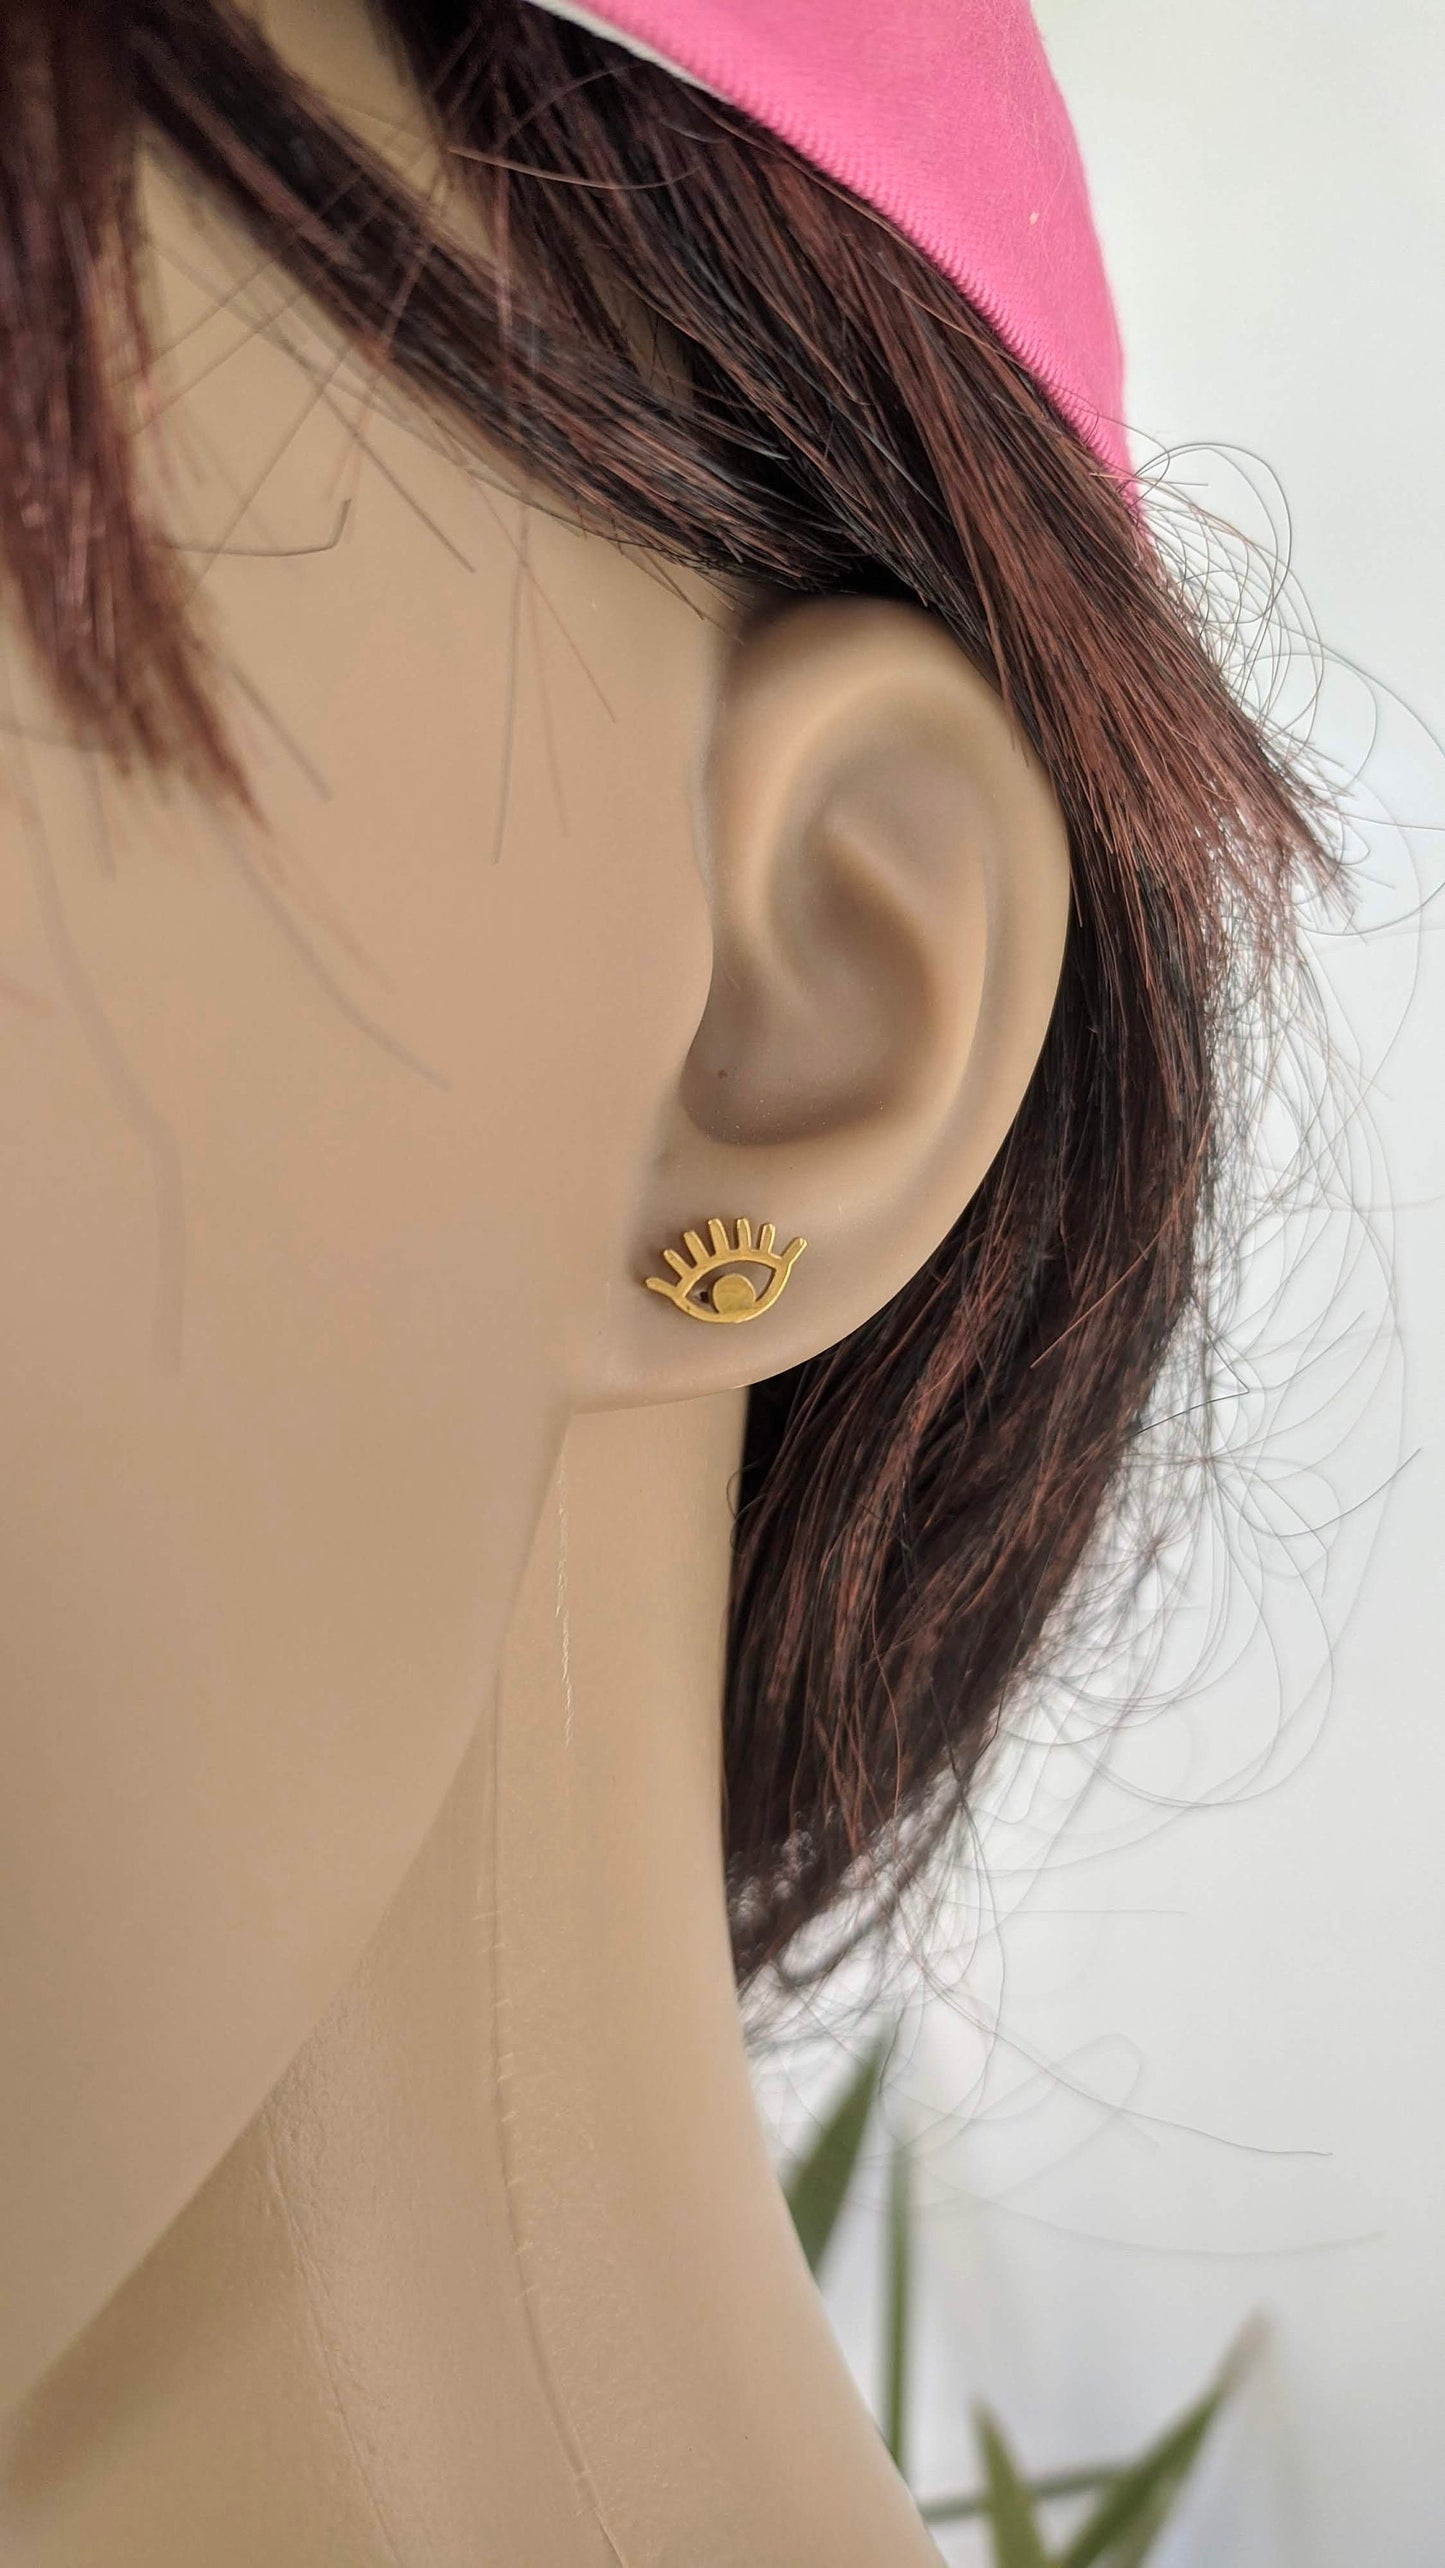 Tiny gold or silver evil eye stud earrings - Stainless steel earrings - Greek gift